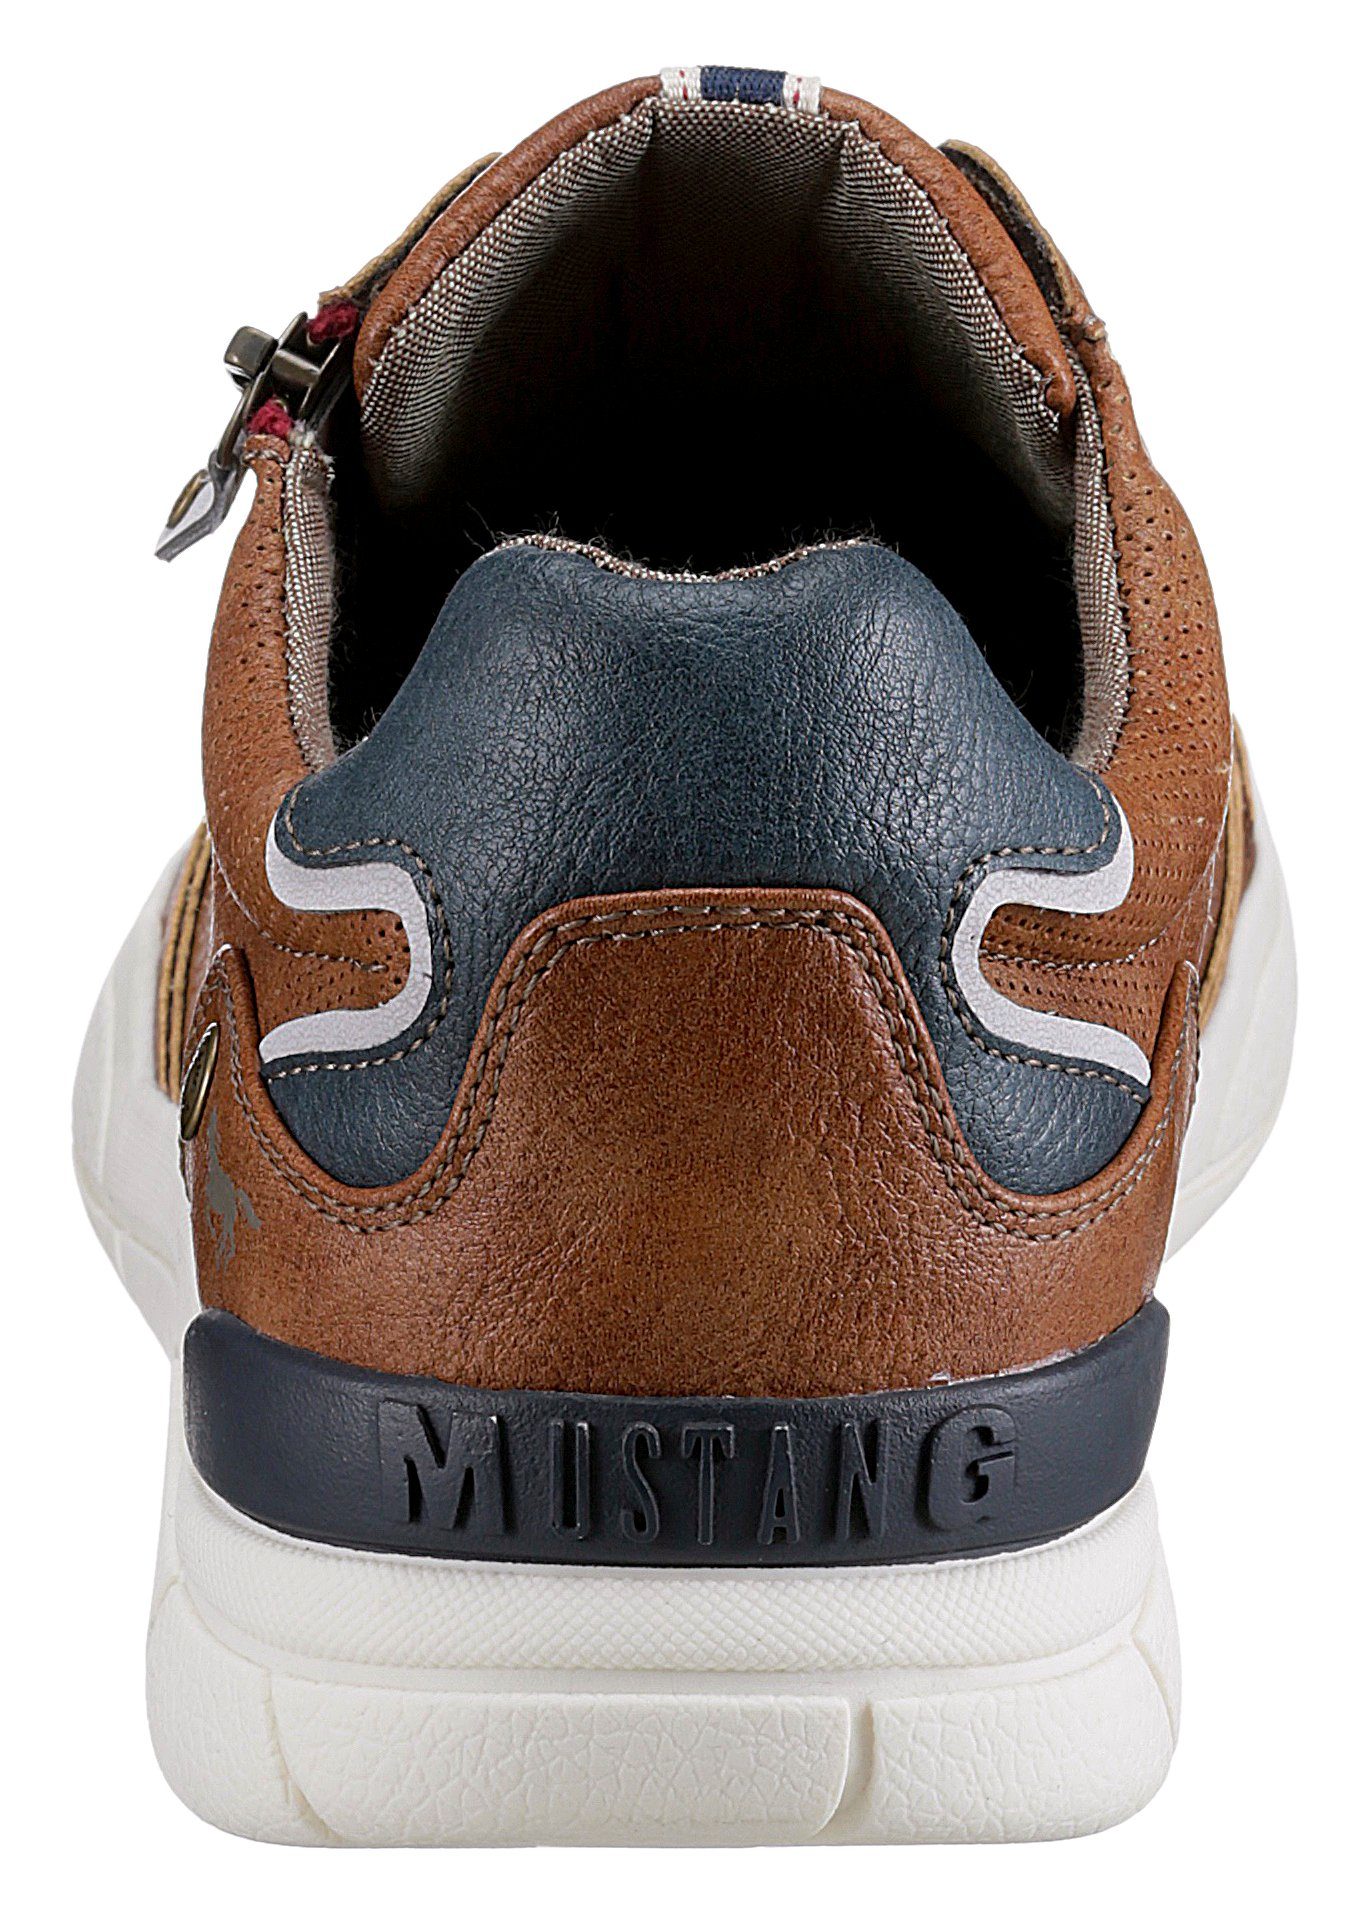 Mustang mit cognac Sneaker Shoes seitlichem Reißverschluss